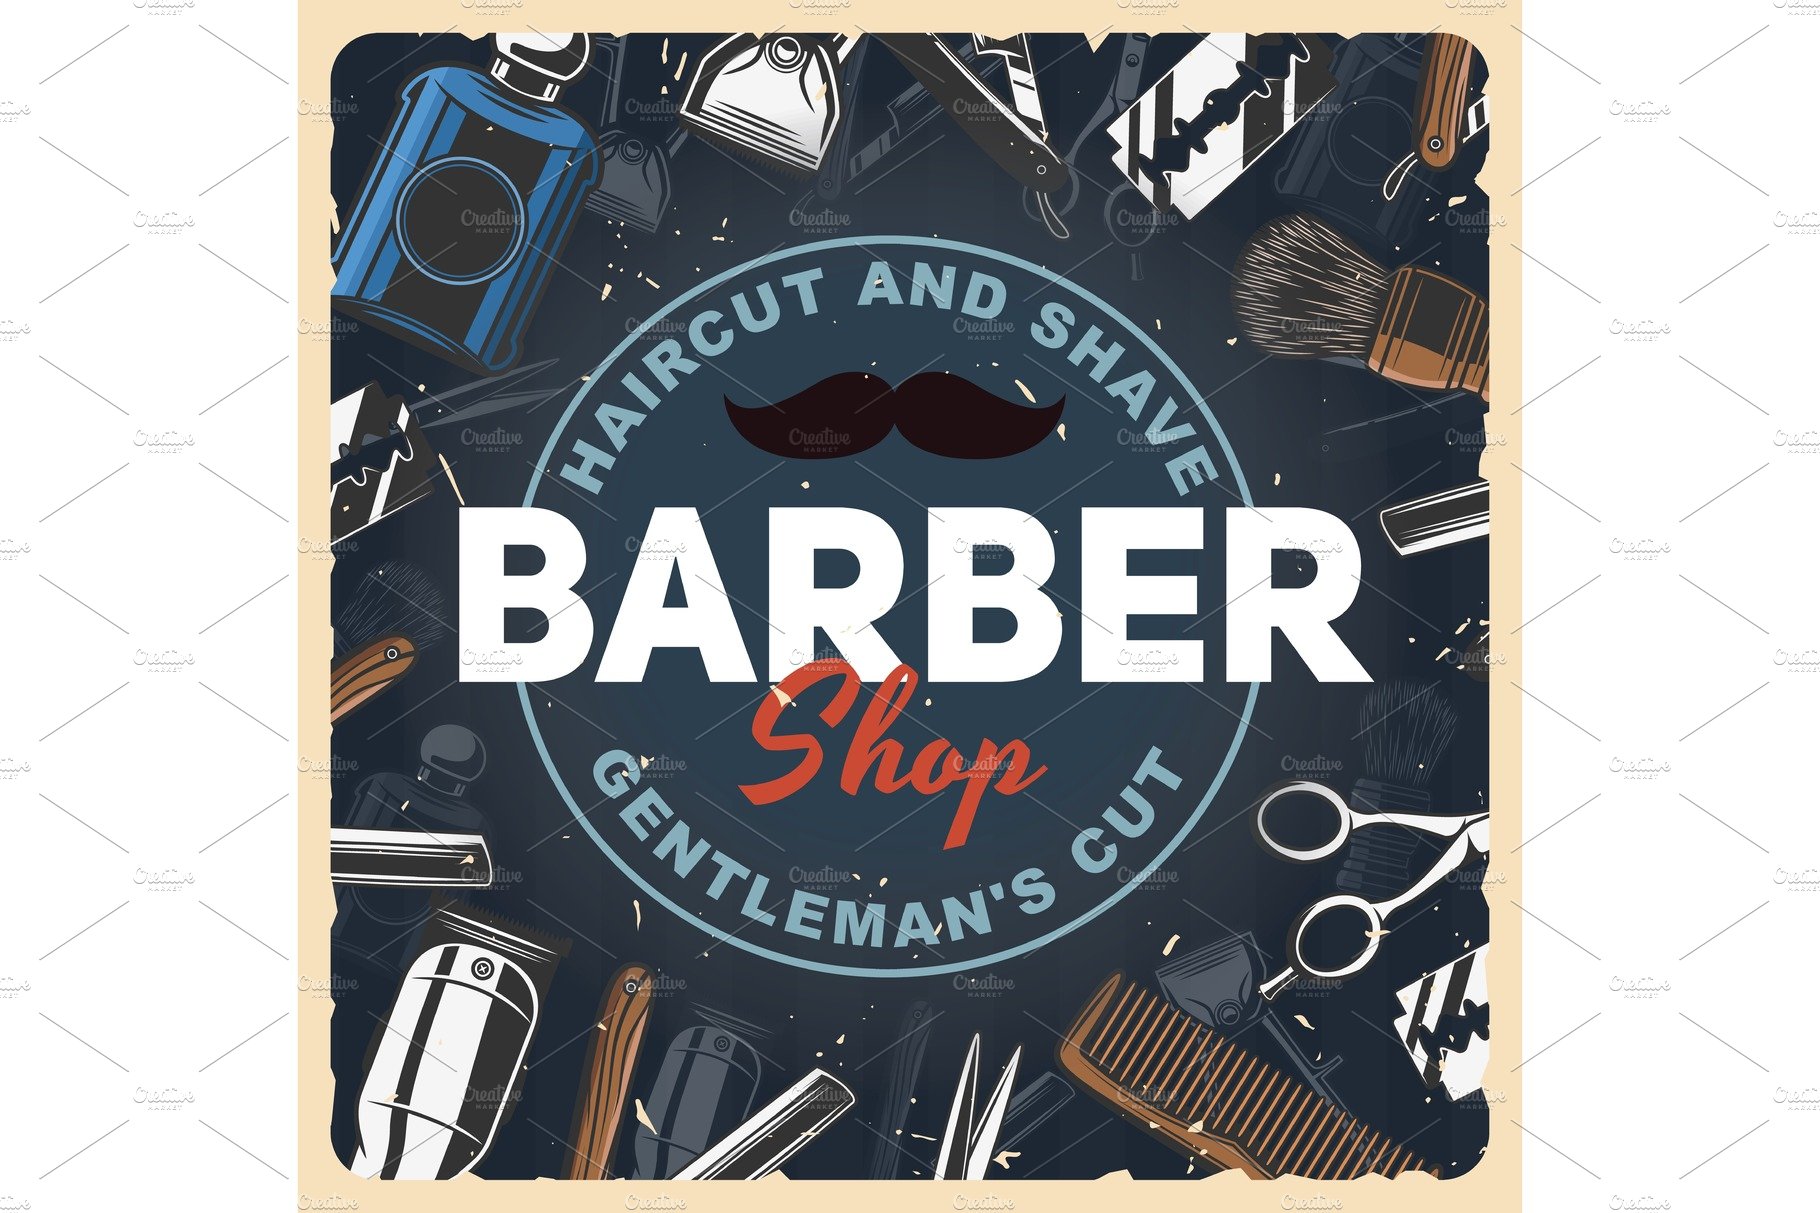 Barbershop razors, blade, shaver cover image.